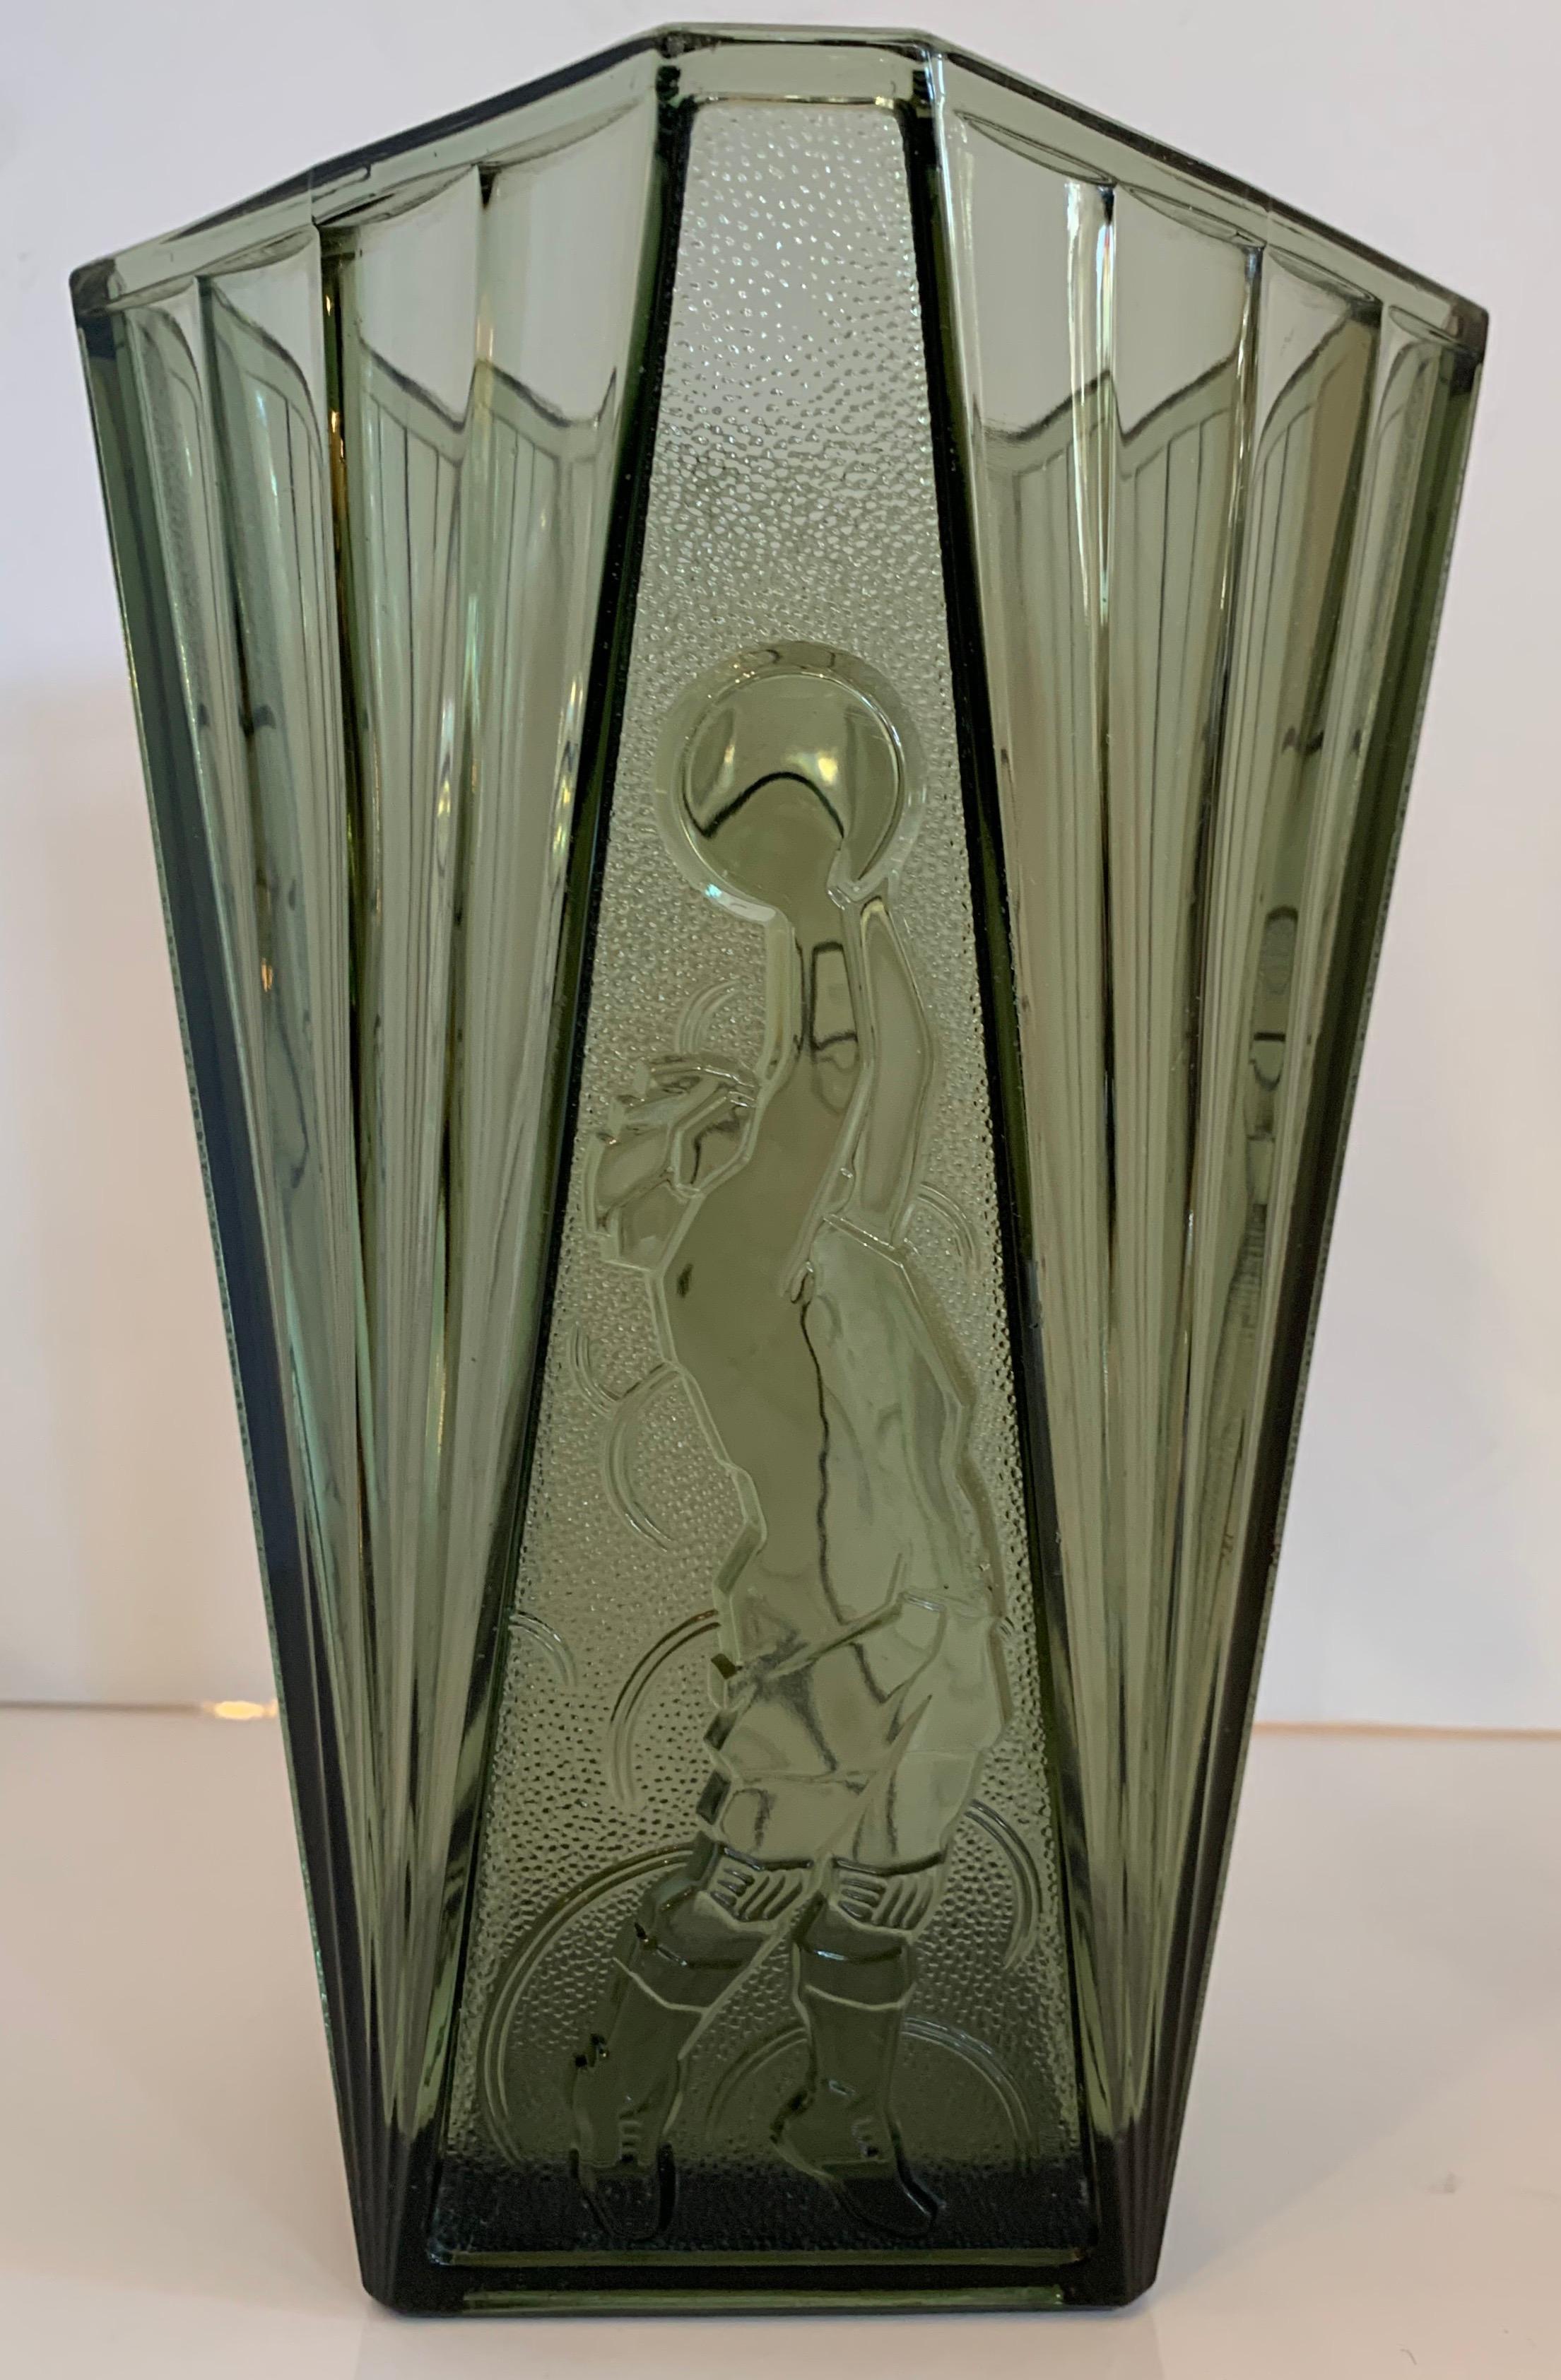 A wonderful Art Deco Val Saint Lambert crystal vase Luxval edition green tone vase of a basketball player.